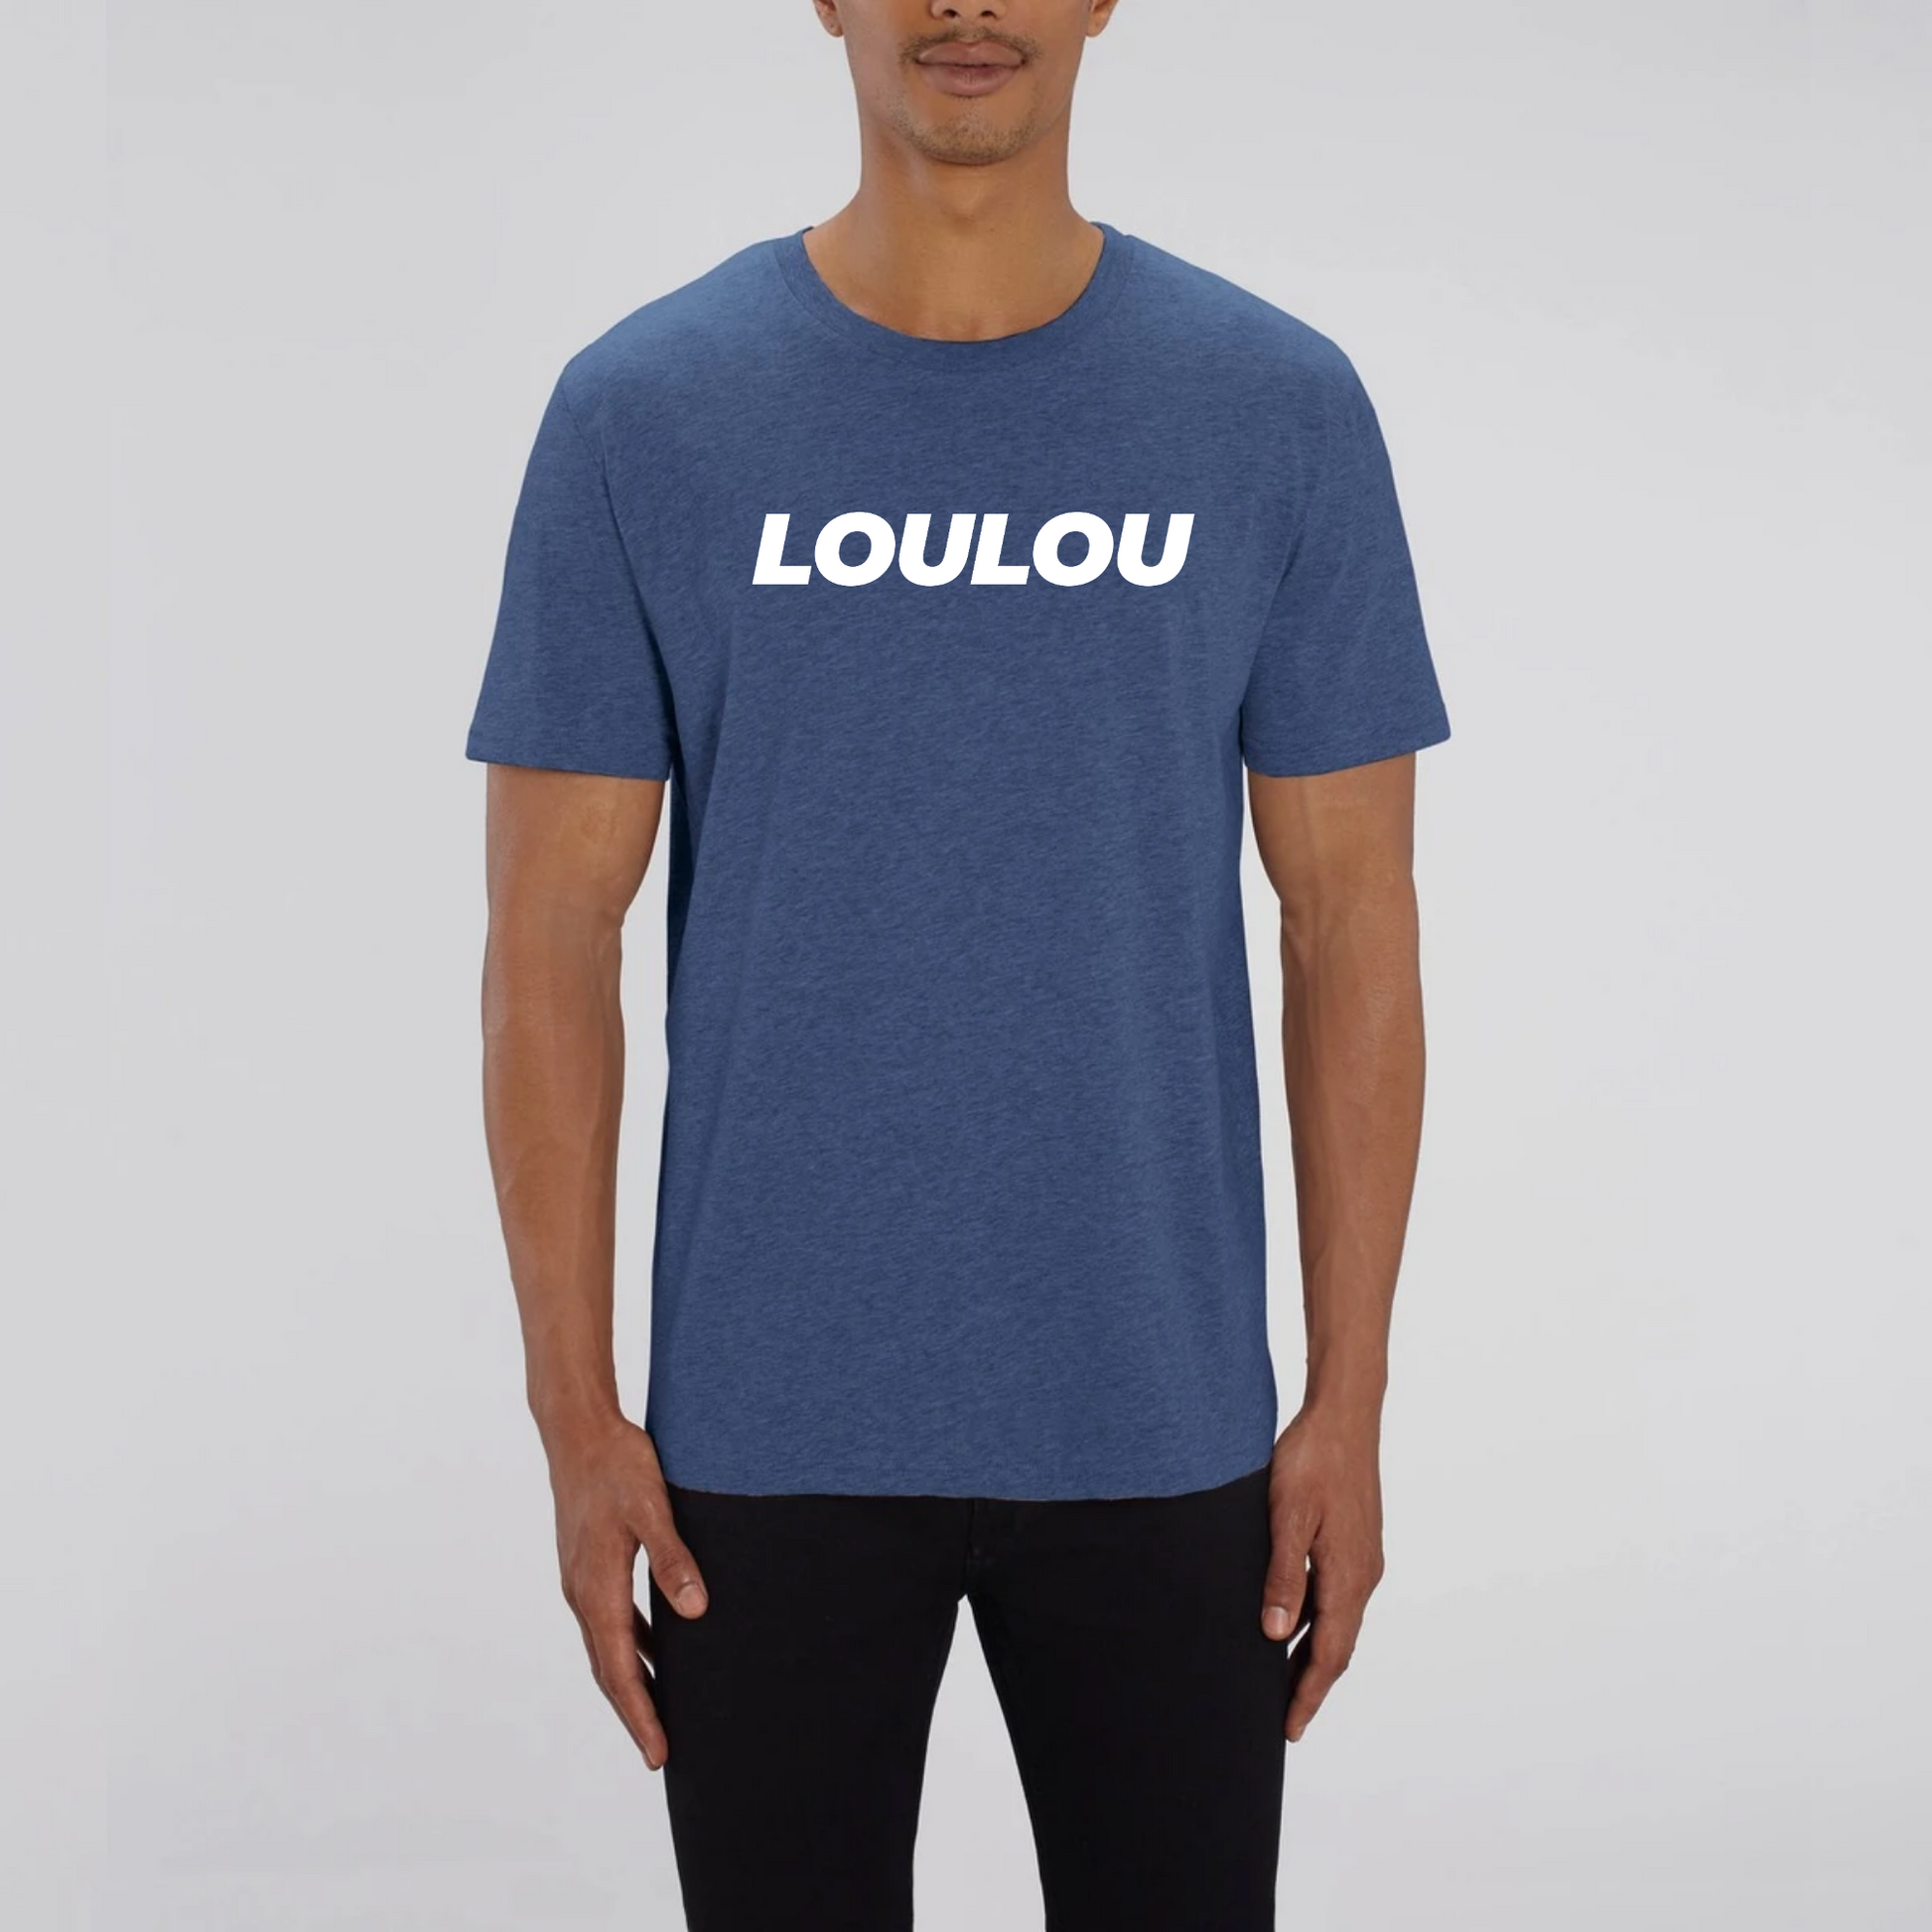 t-shirt loulou, T-French, t-shirt homme, coton bio, t-shirt saint valentin, t-shirt surnom, t-shirt humour, Indigo